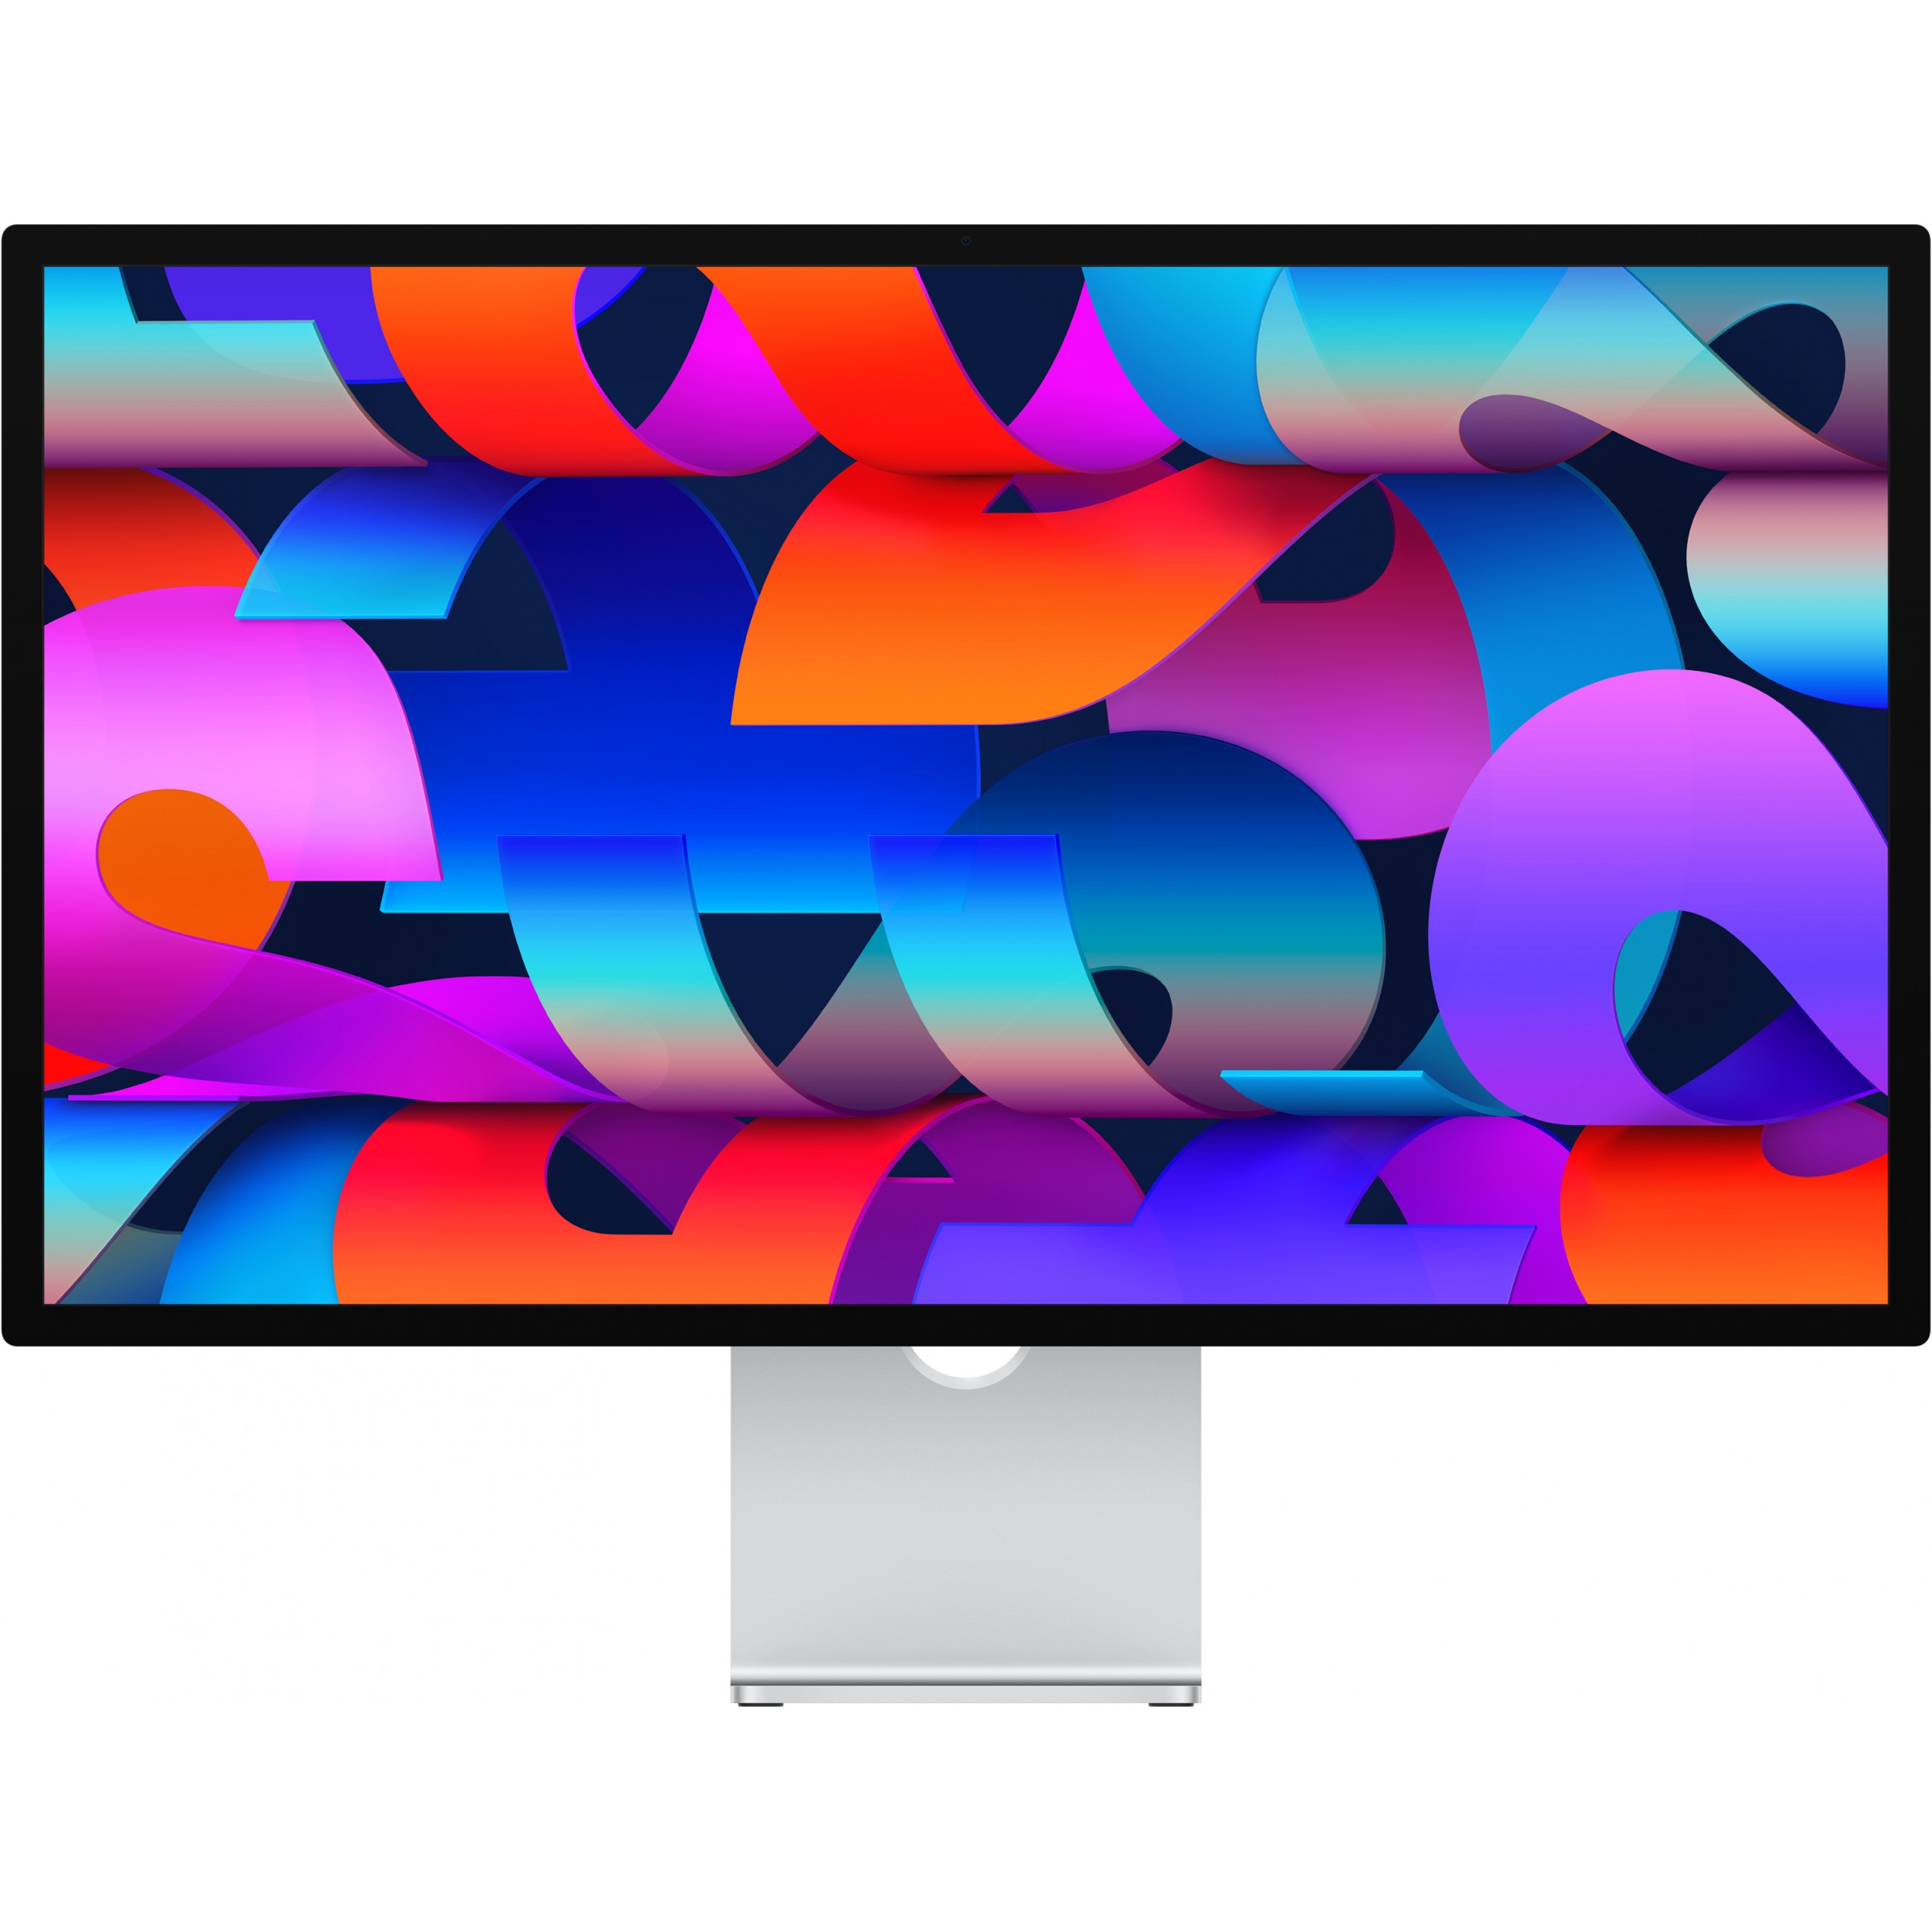 Apple Studio Display computer monitor